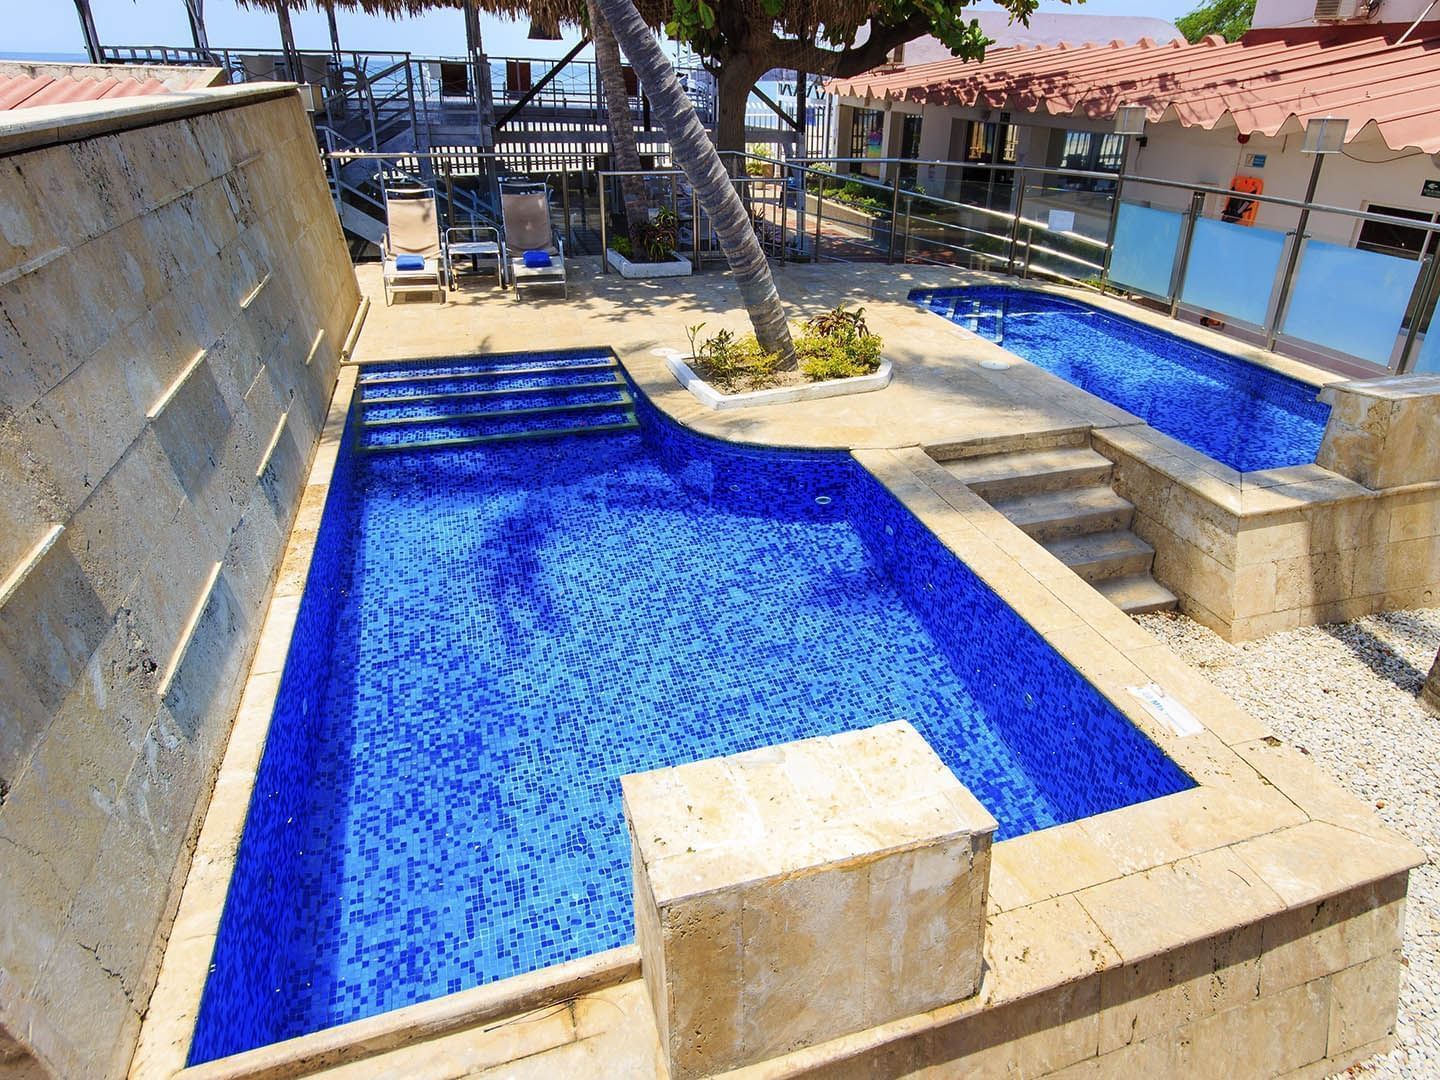 Outdoor mini pool with sunbeds at GIO Hotel Santa Marta Tama